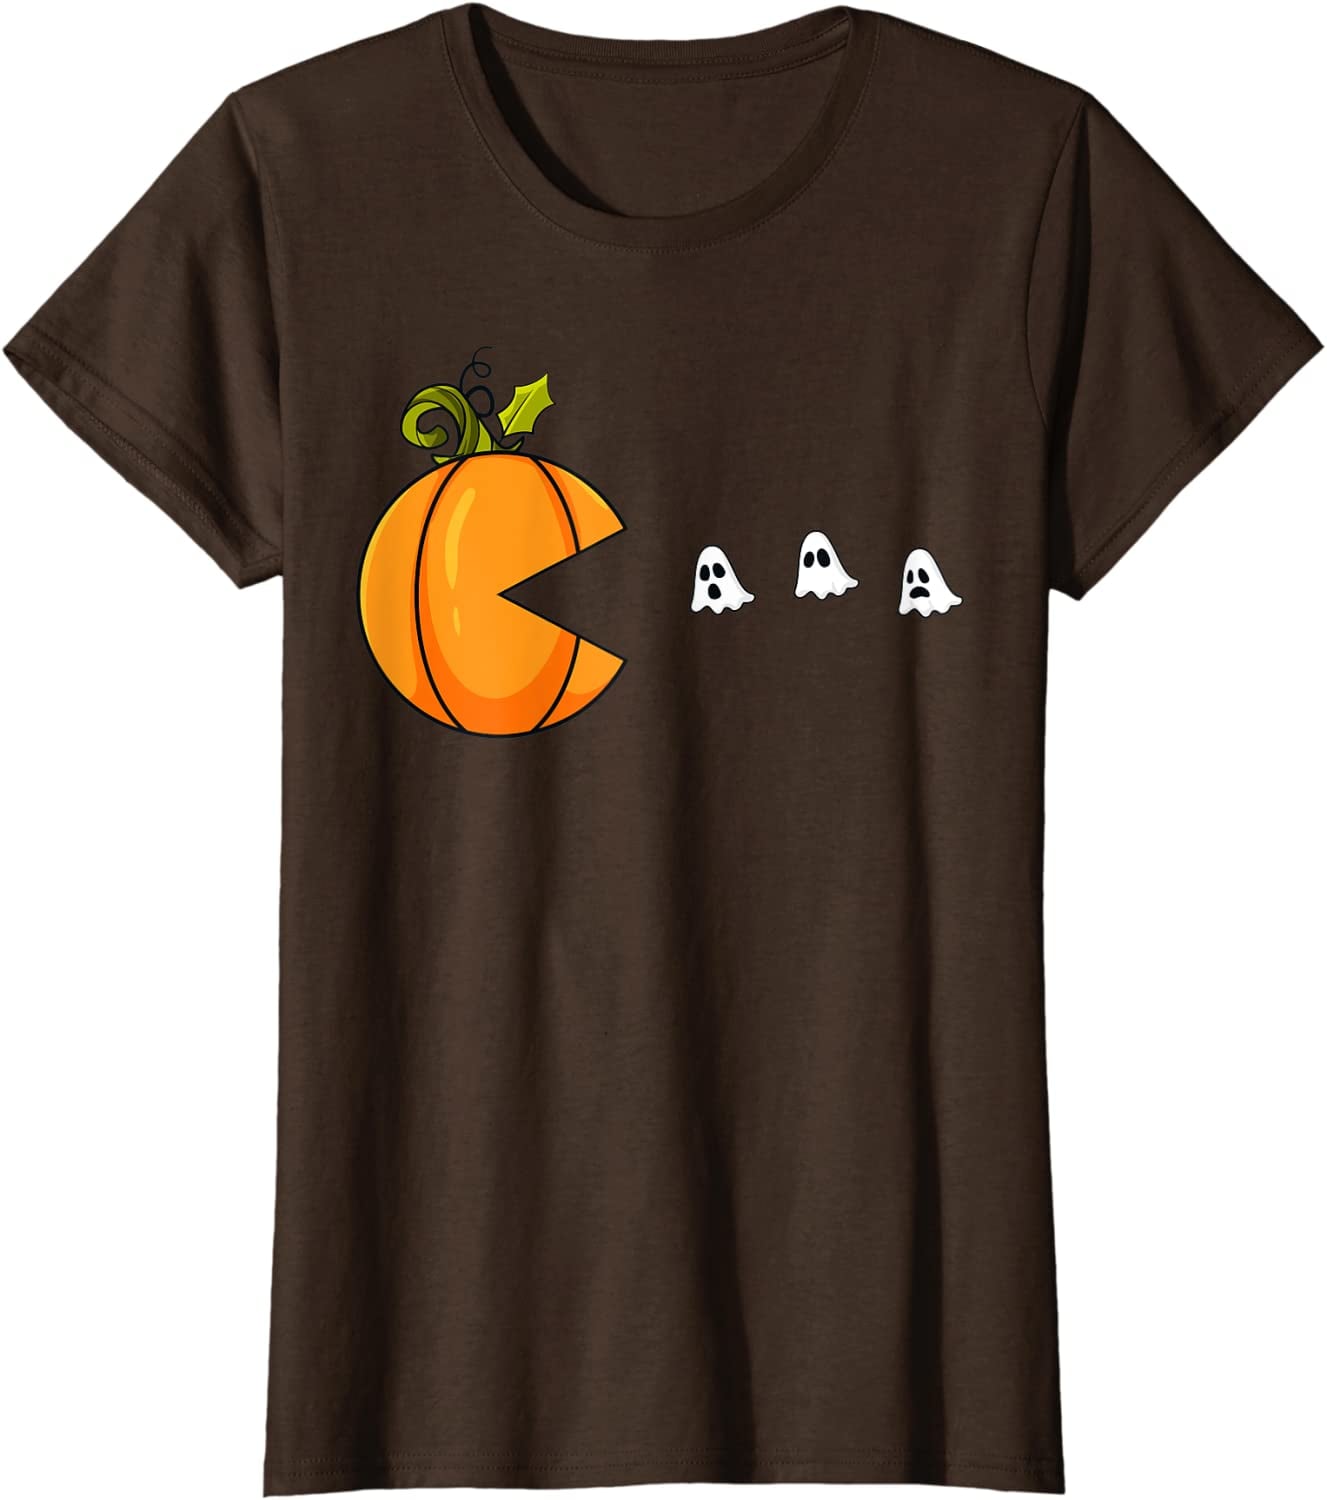 Aubergine leerboek strottenhoofd The Best Cute Halloween Shirts For Women on Amazon | POPSUGAR Fashion